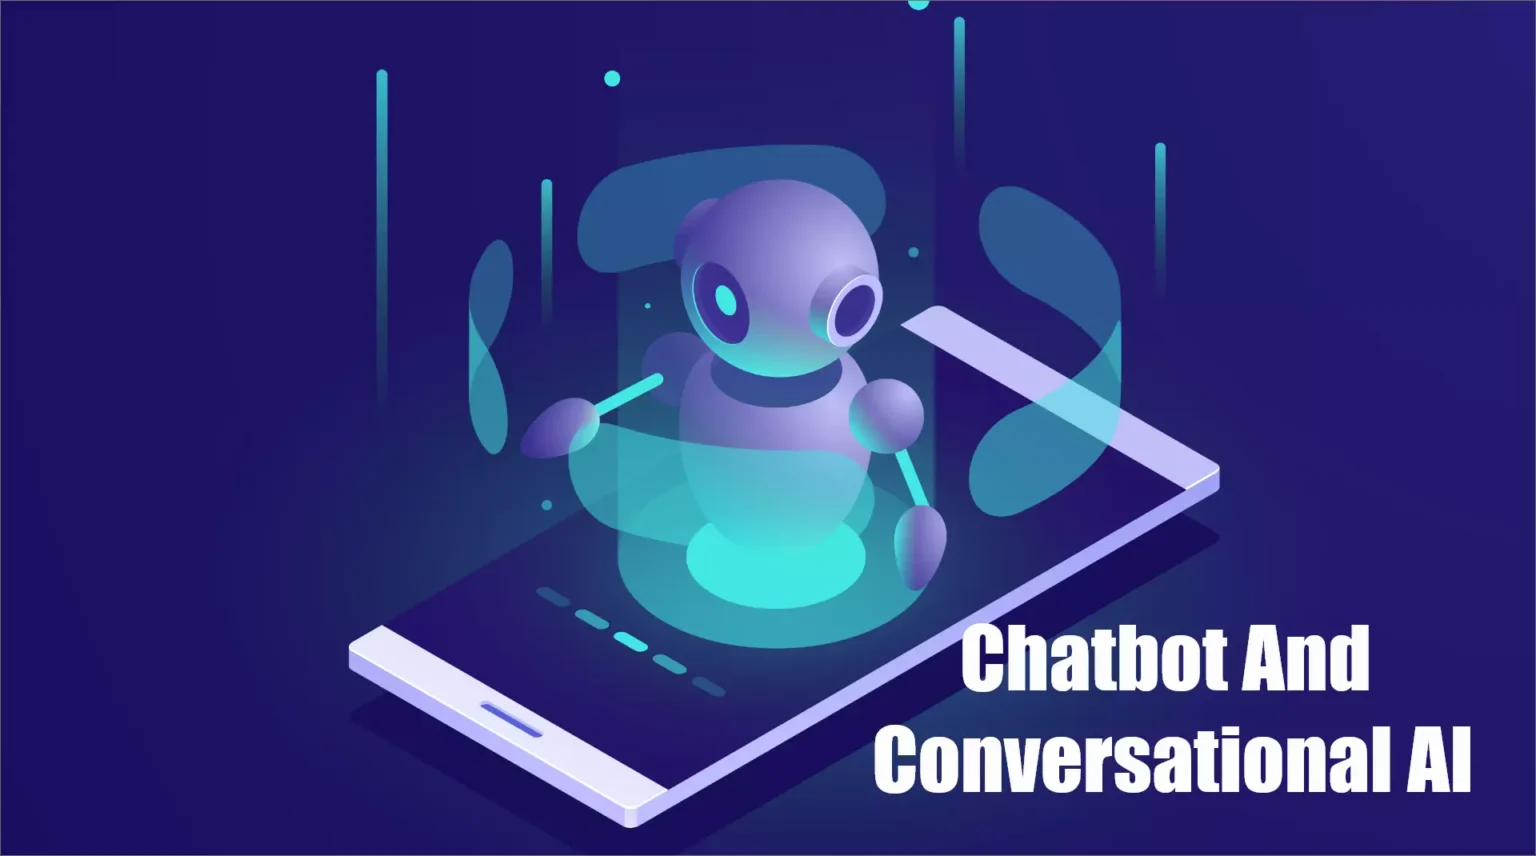 Chatbot And Conversational AI